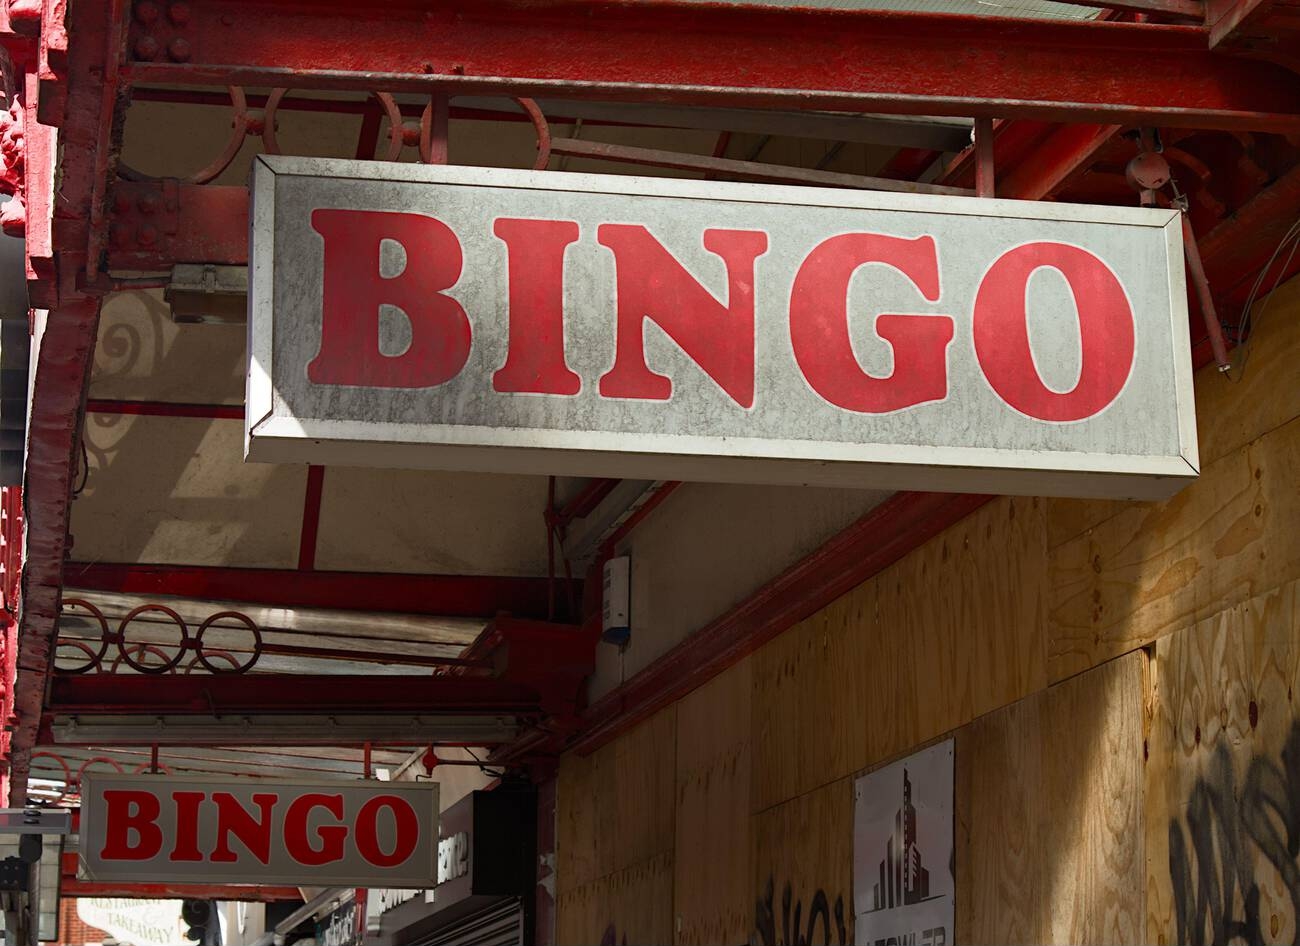 Bingo (British Version)